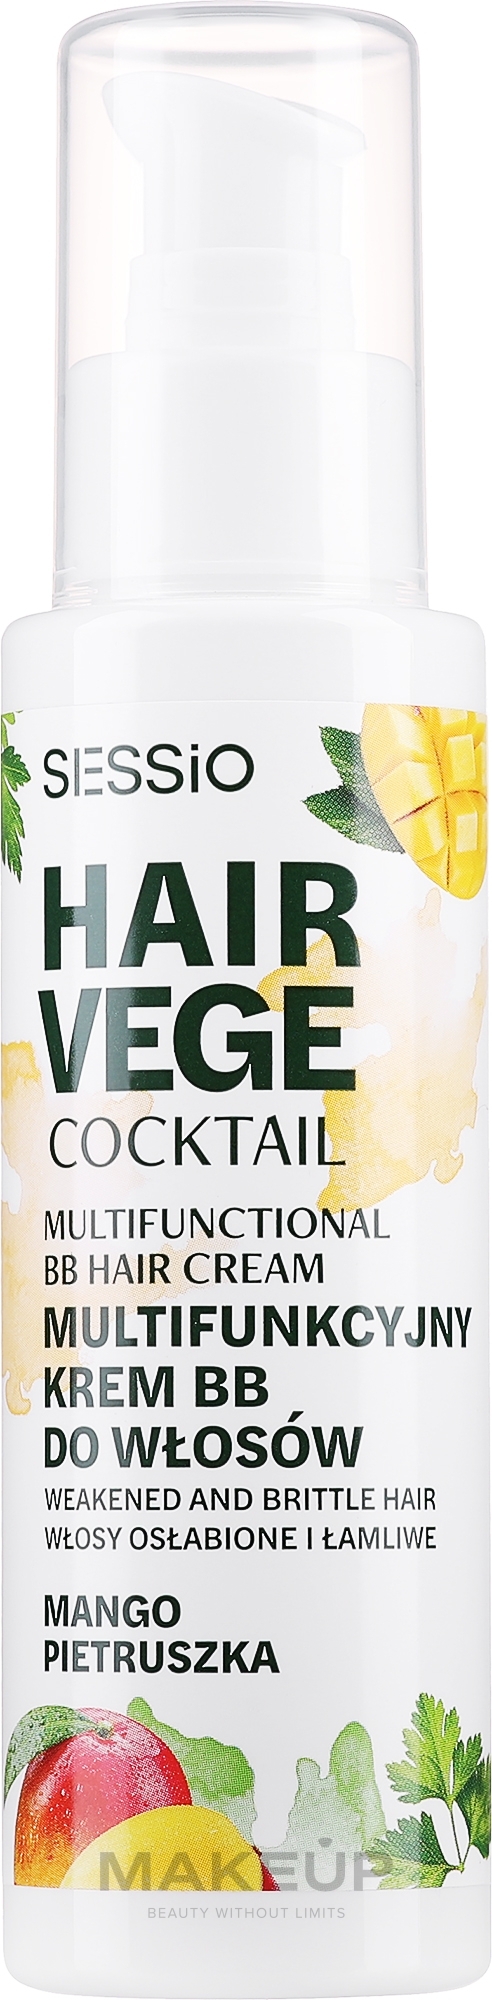 Multifunktionale BB-Haarcreme Mango - Sessio Hair Vege Cocktail Multifunctional BB Hair Crem — Bild 100 g